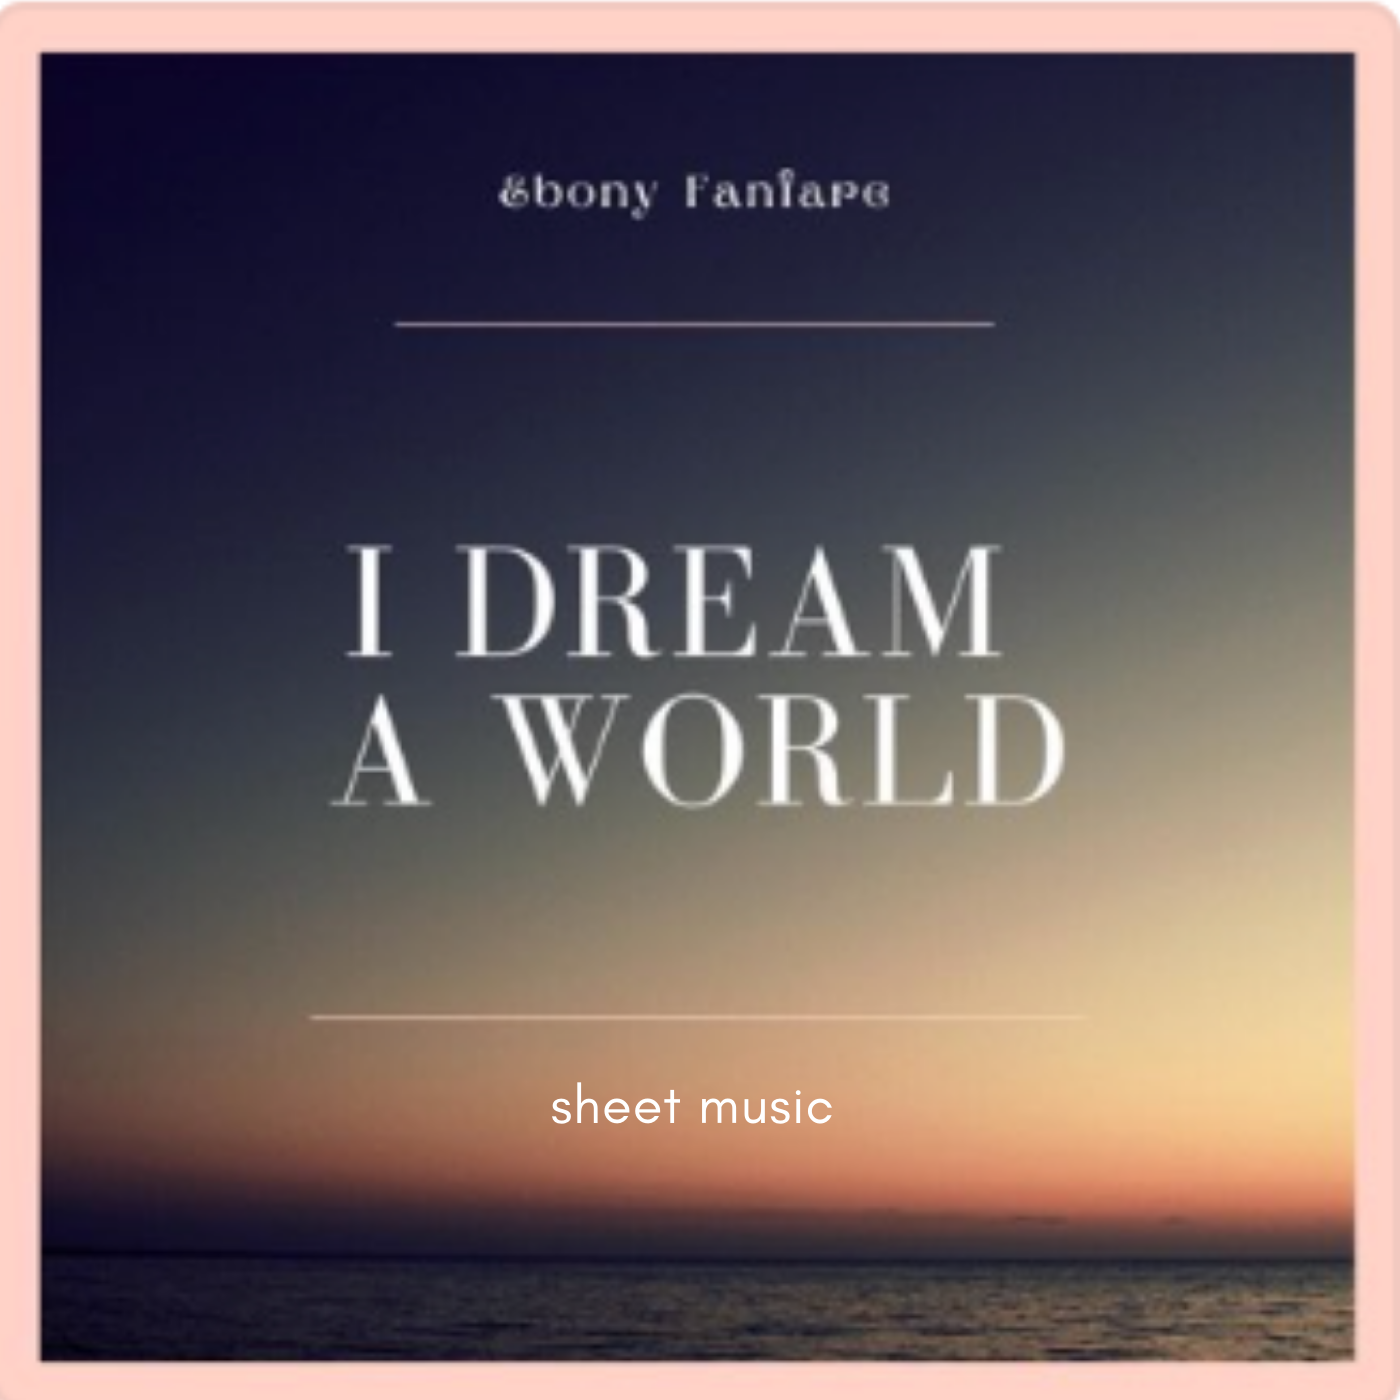 I Dream a World (sheet music)